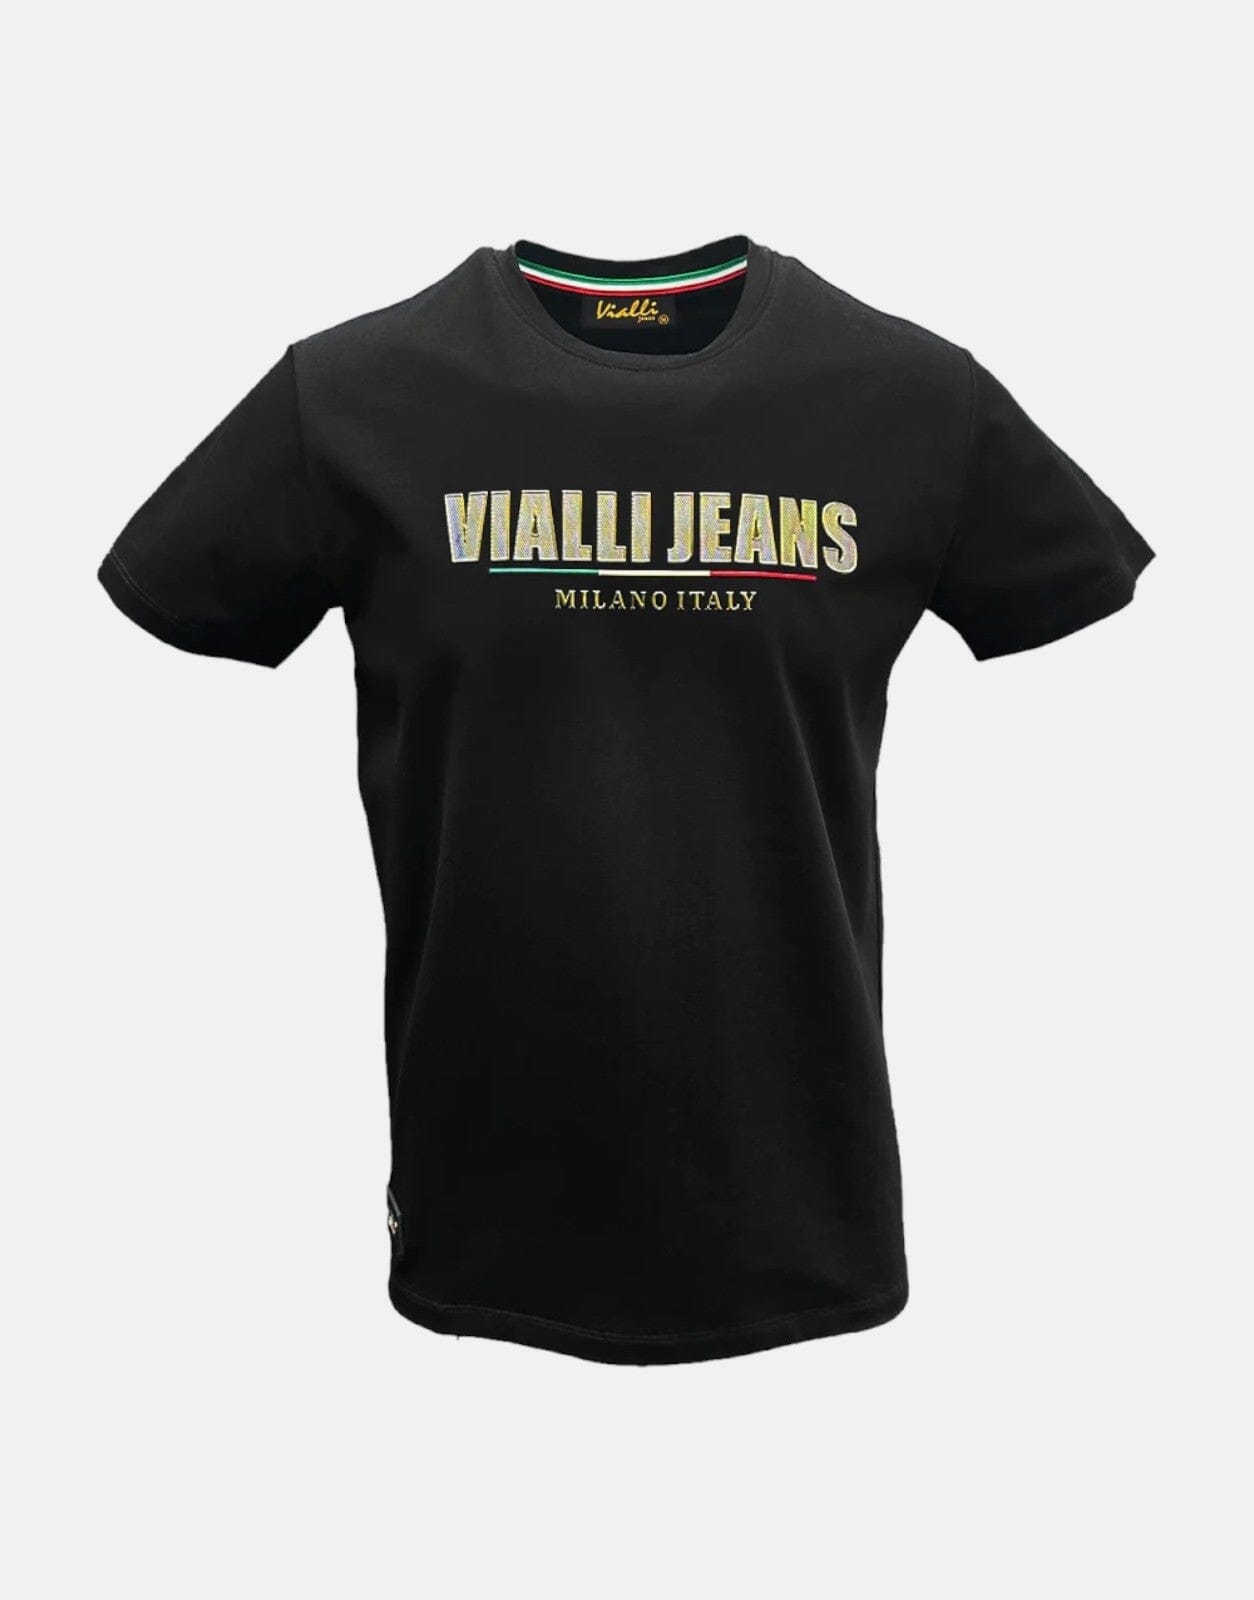 Vialli Fambani Black T-Shirt - Subwear